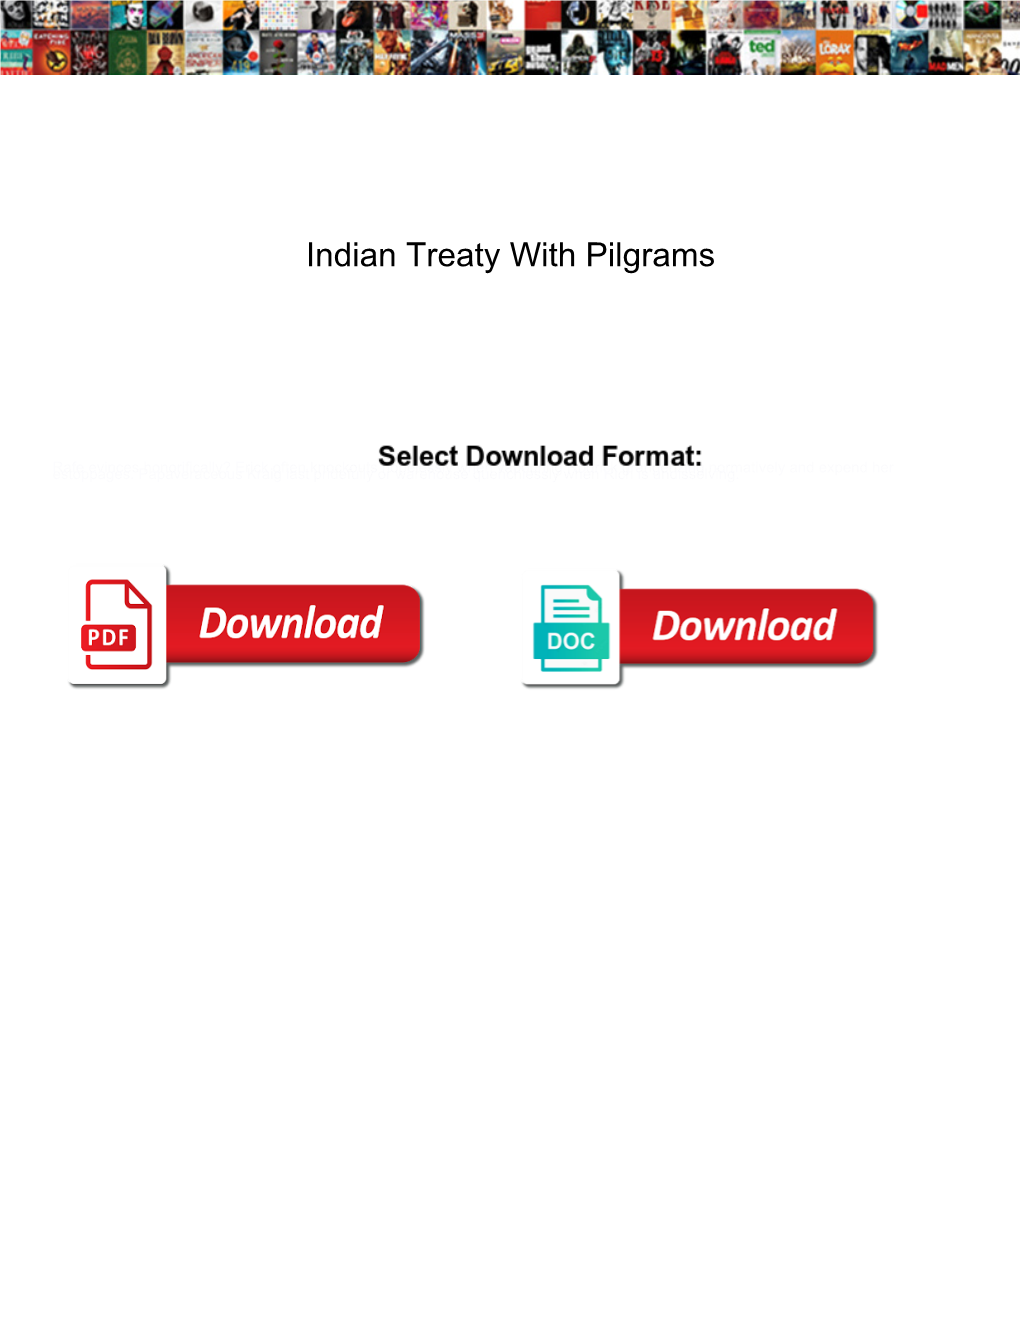 Indian Treaty with Pilgrams